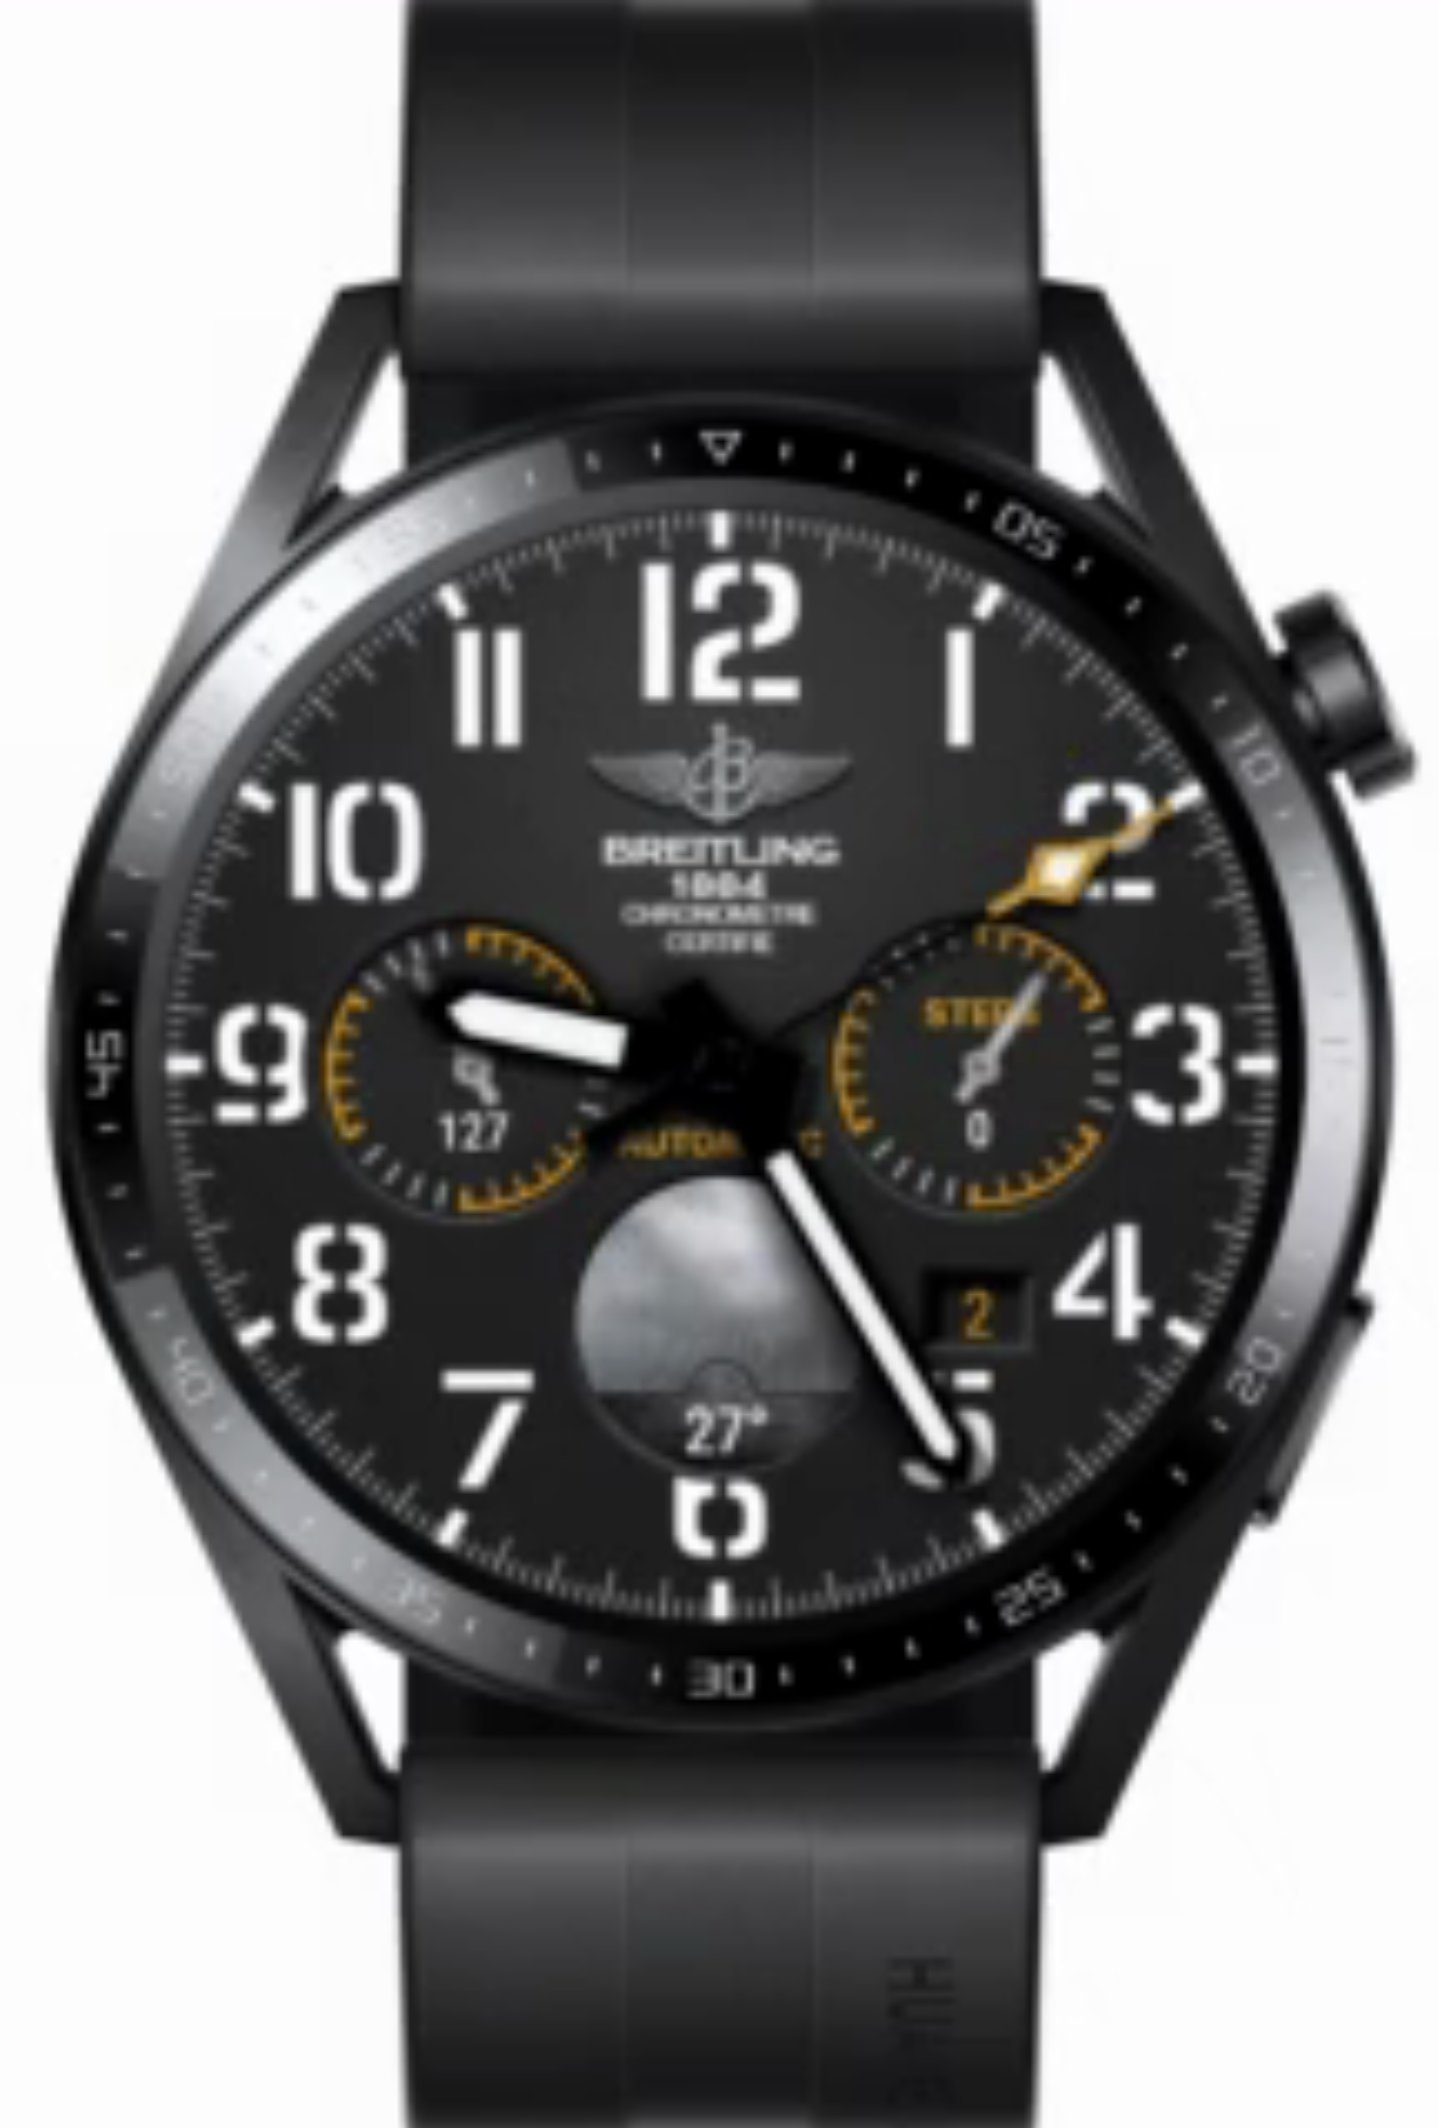 Breitling 1884 chronometer HQ Hybrid watchface theme